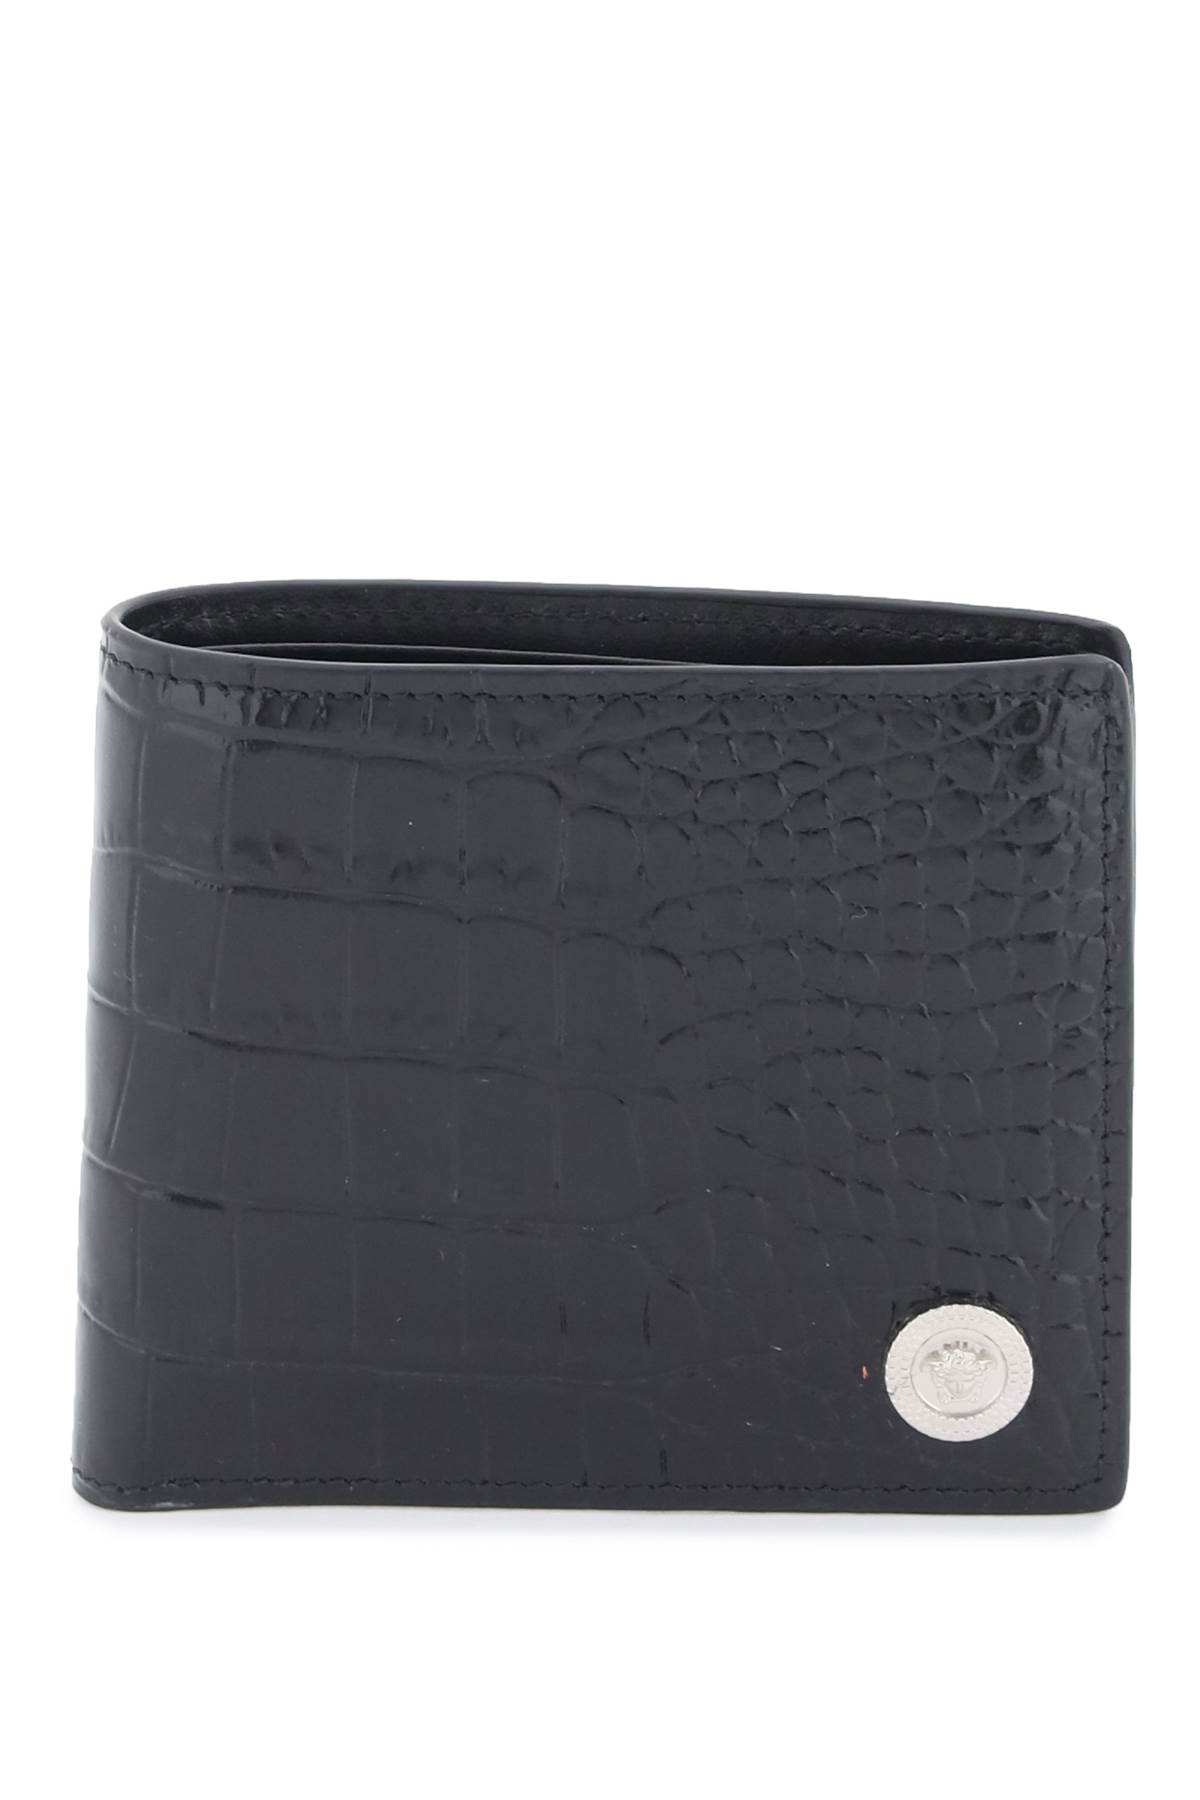 Versace Medusa Biggie Wallet In Black Palladium (black)